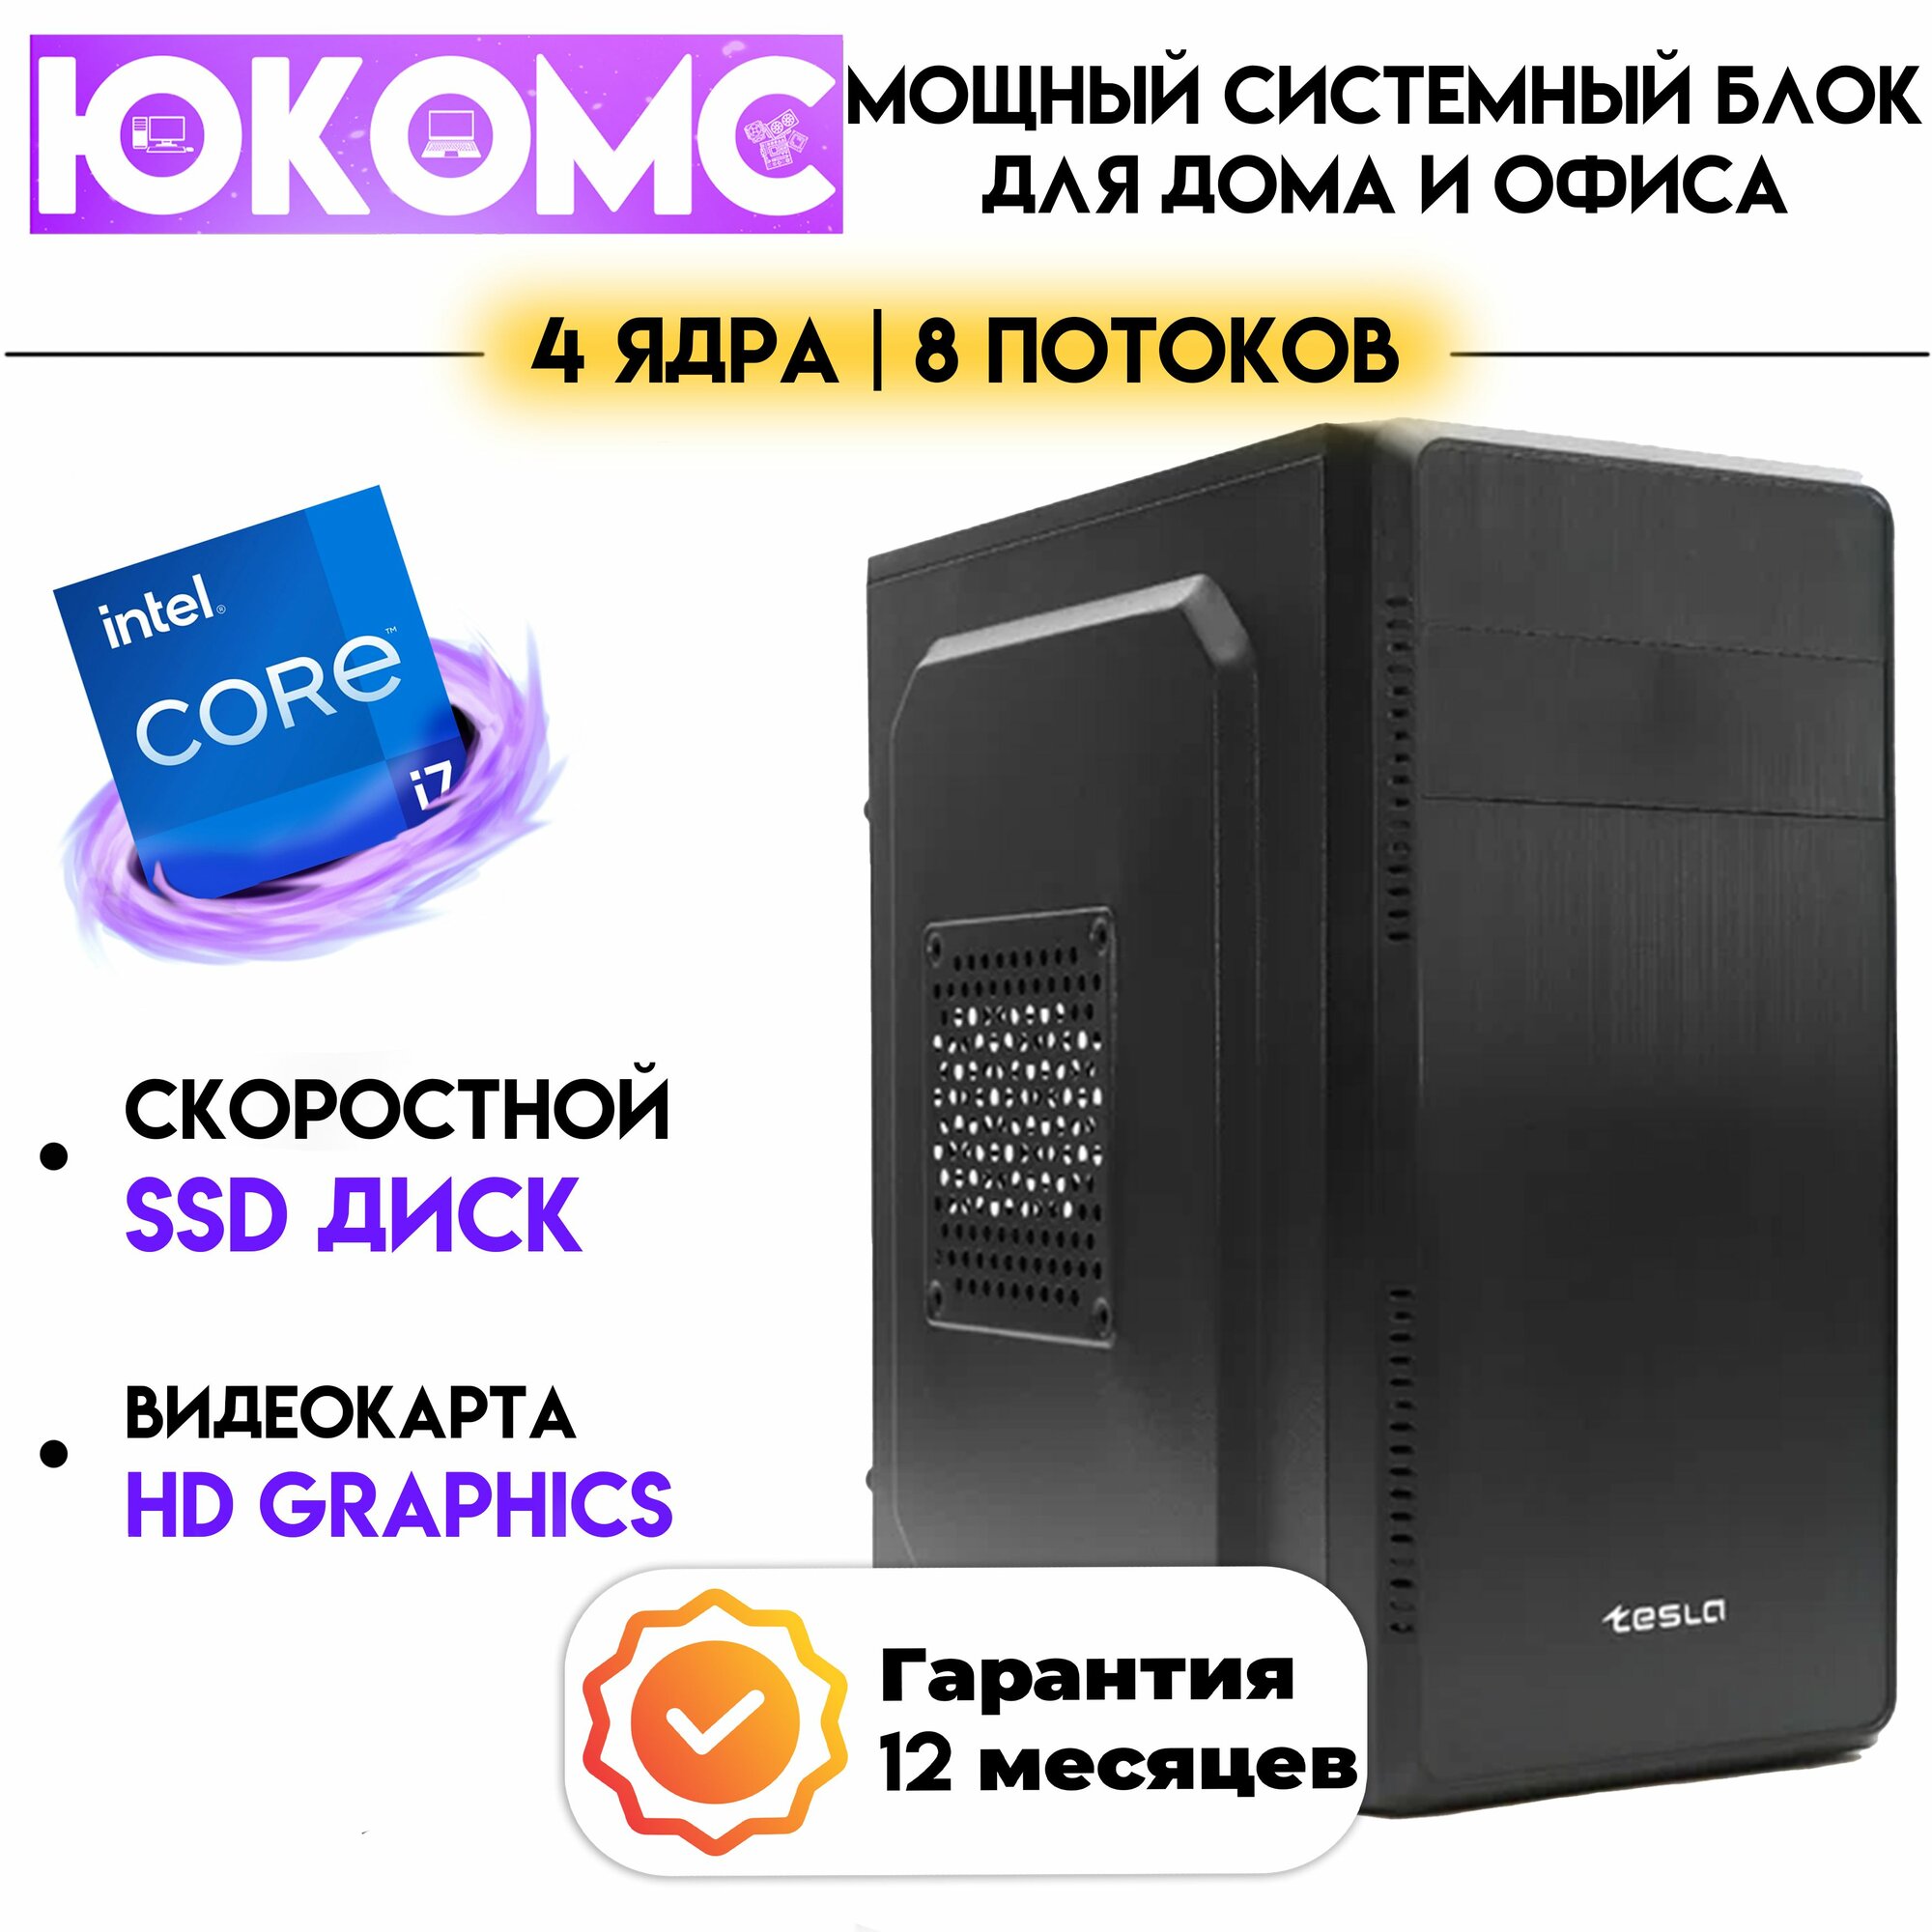 PC юкомс Core i7 2600, SSD 240GB, 4GB DDR3, БП 350W, win 10 pro, Classic black